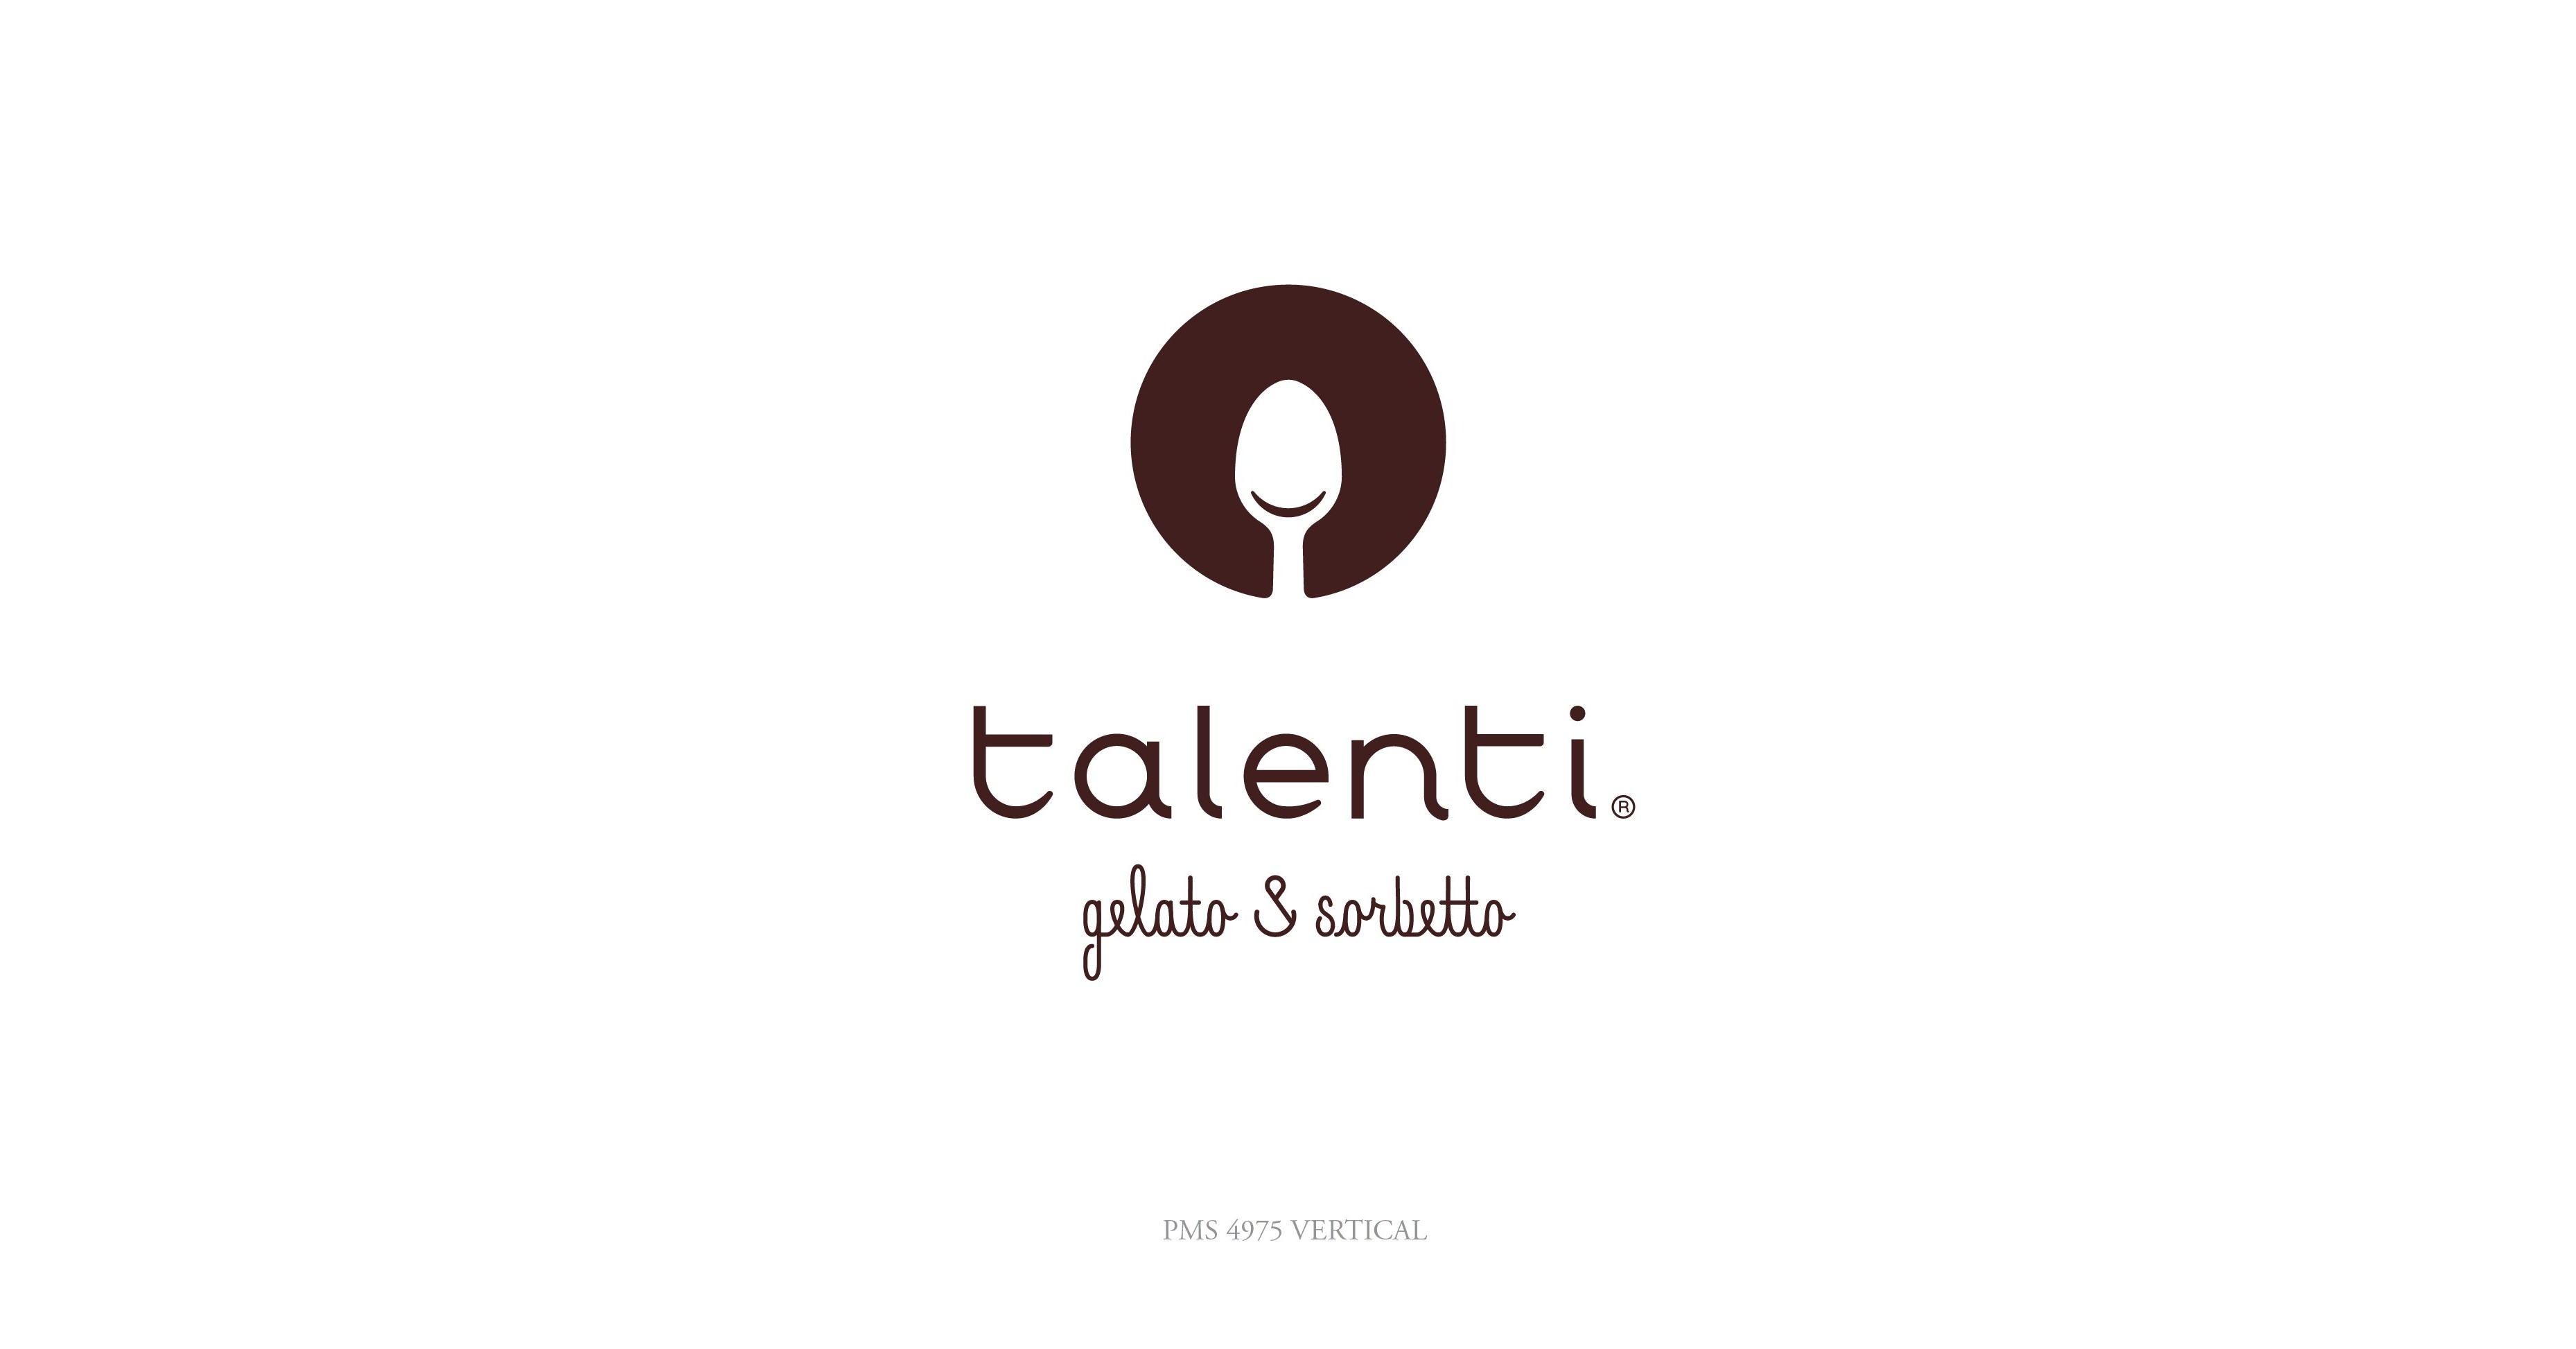 Talenti Gelato & Sorbetto adds flavors to its layered frozen dessert line, 2020-05-07